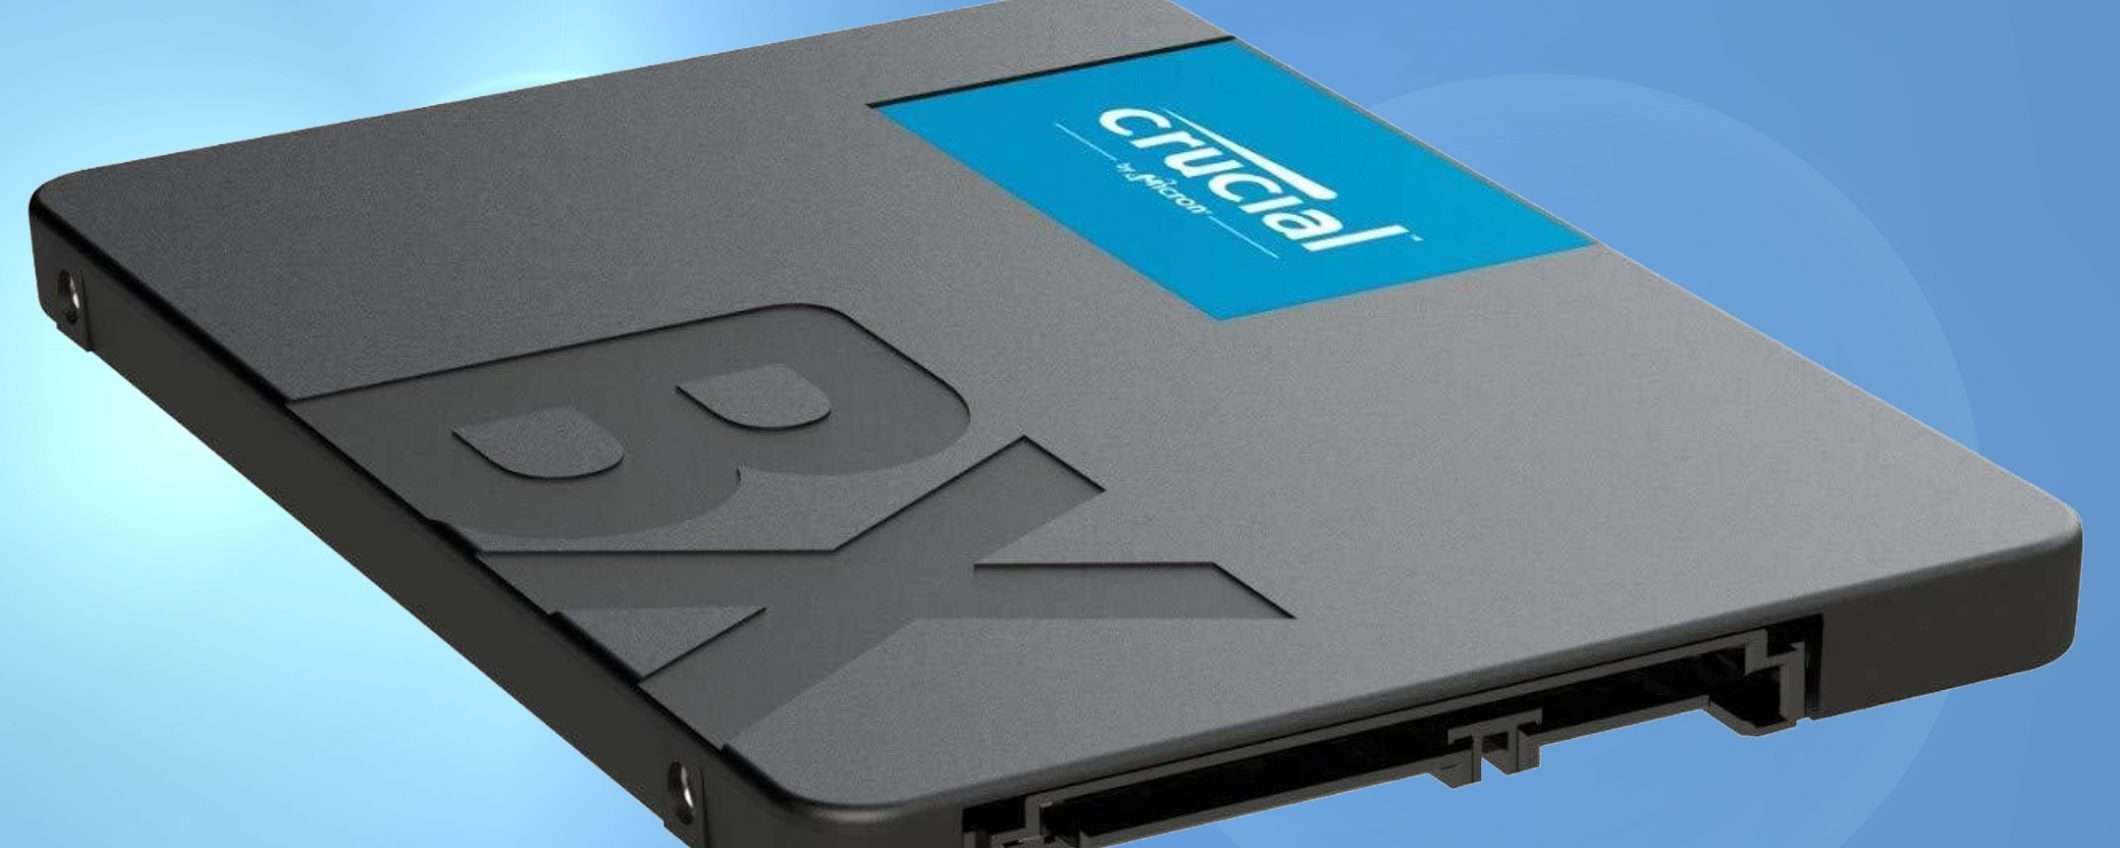 SSD Crucial BX500 da 500 GB costa meno di 30 euro su eBay